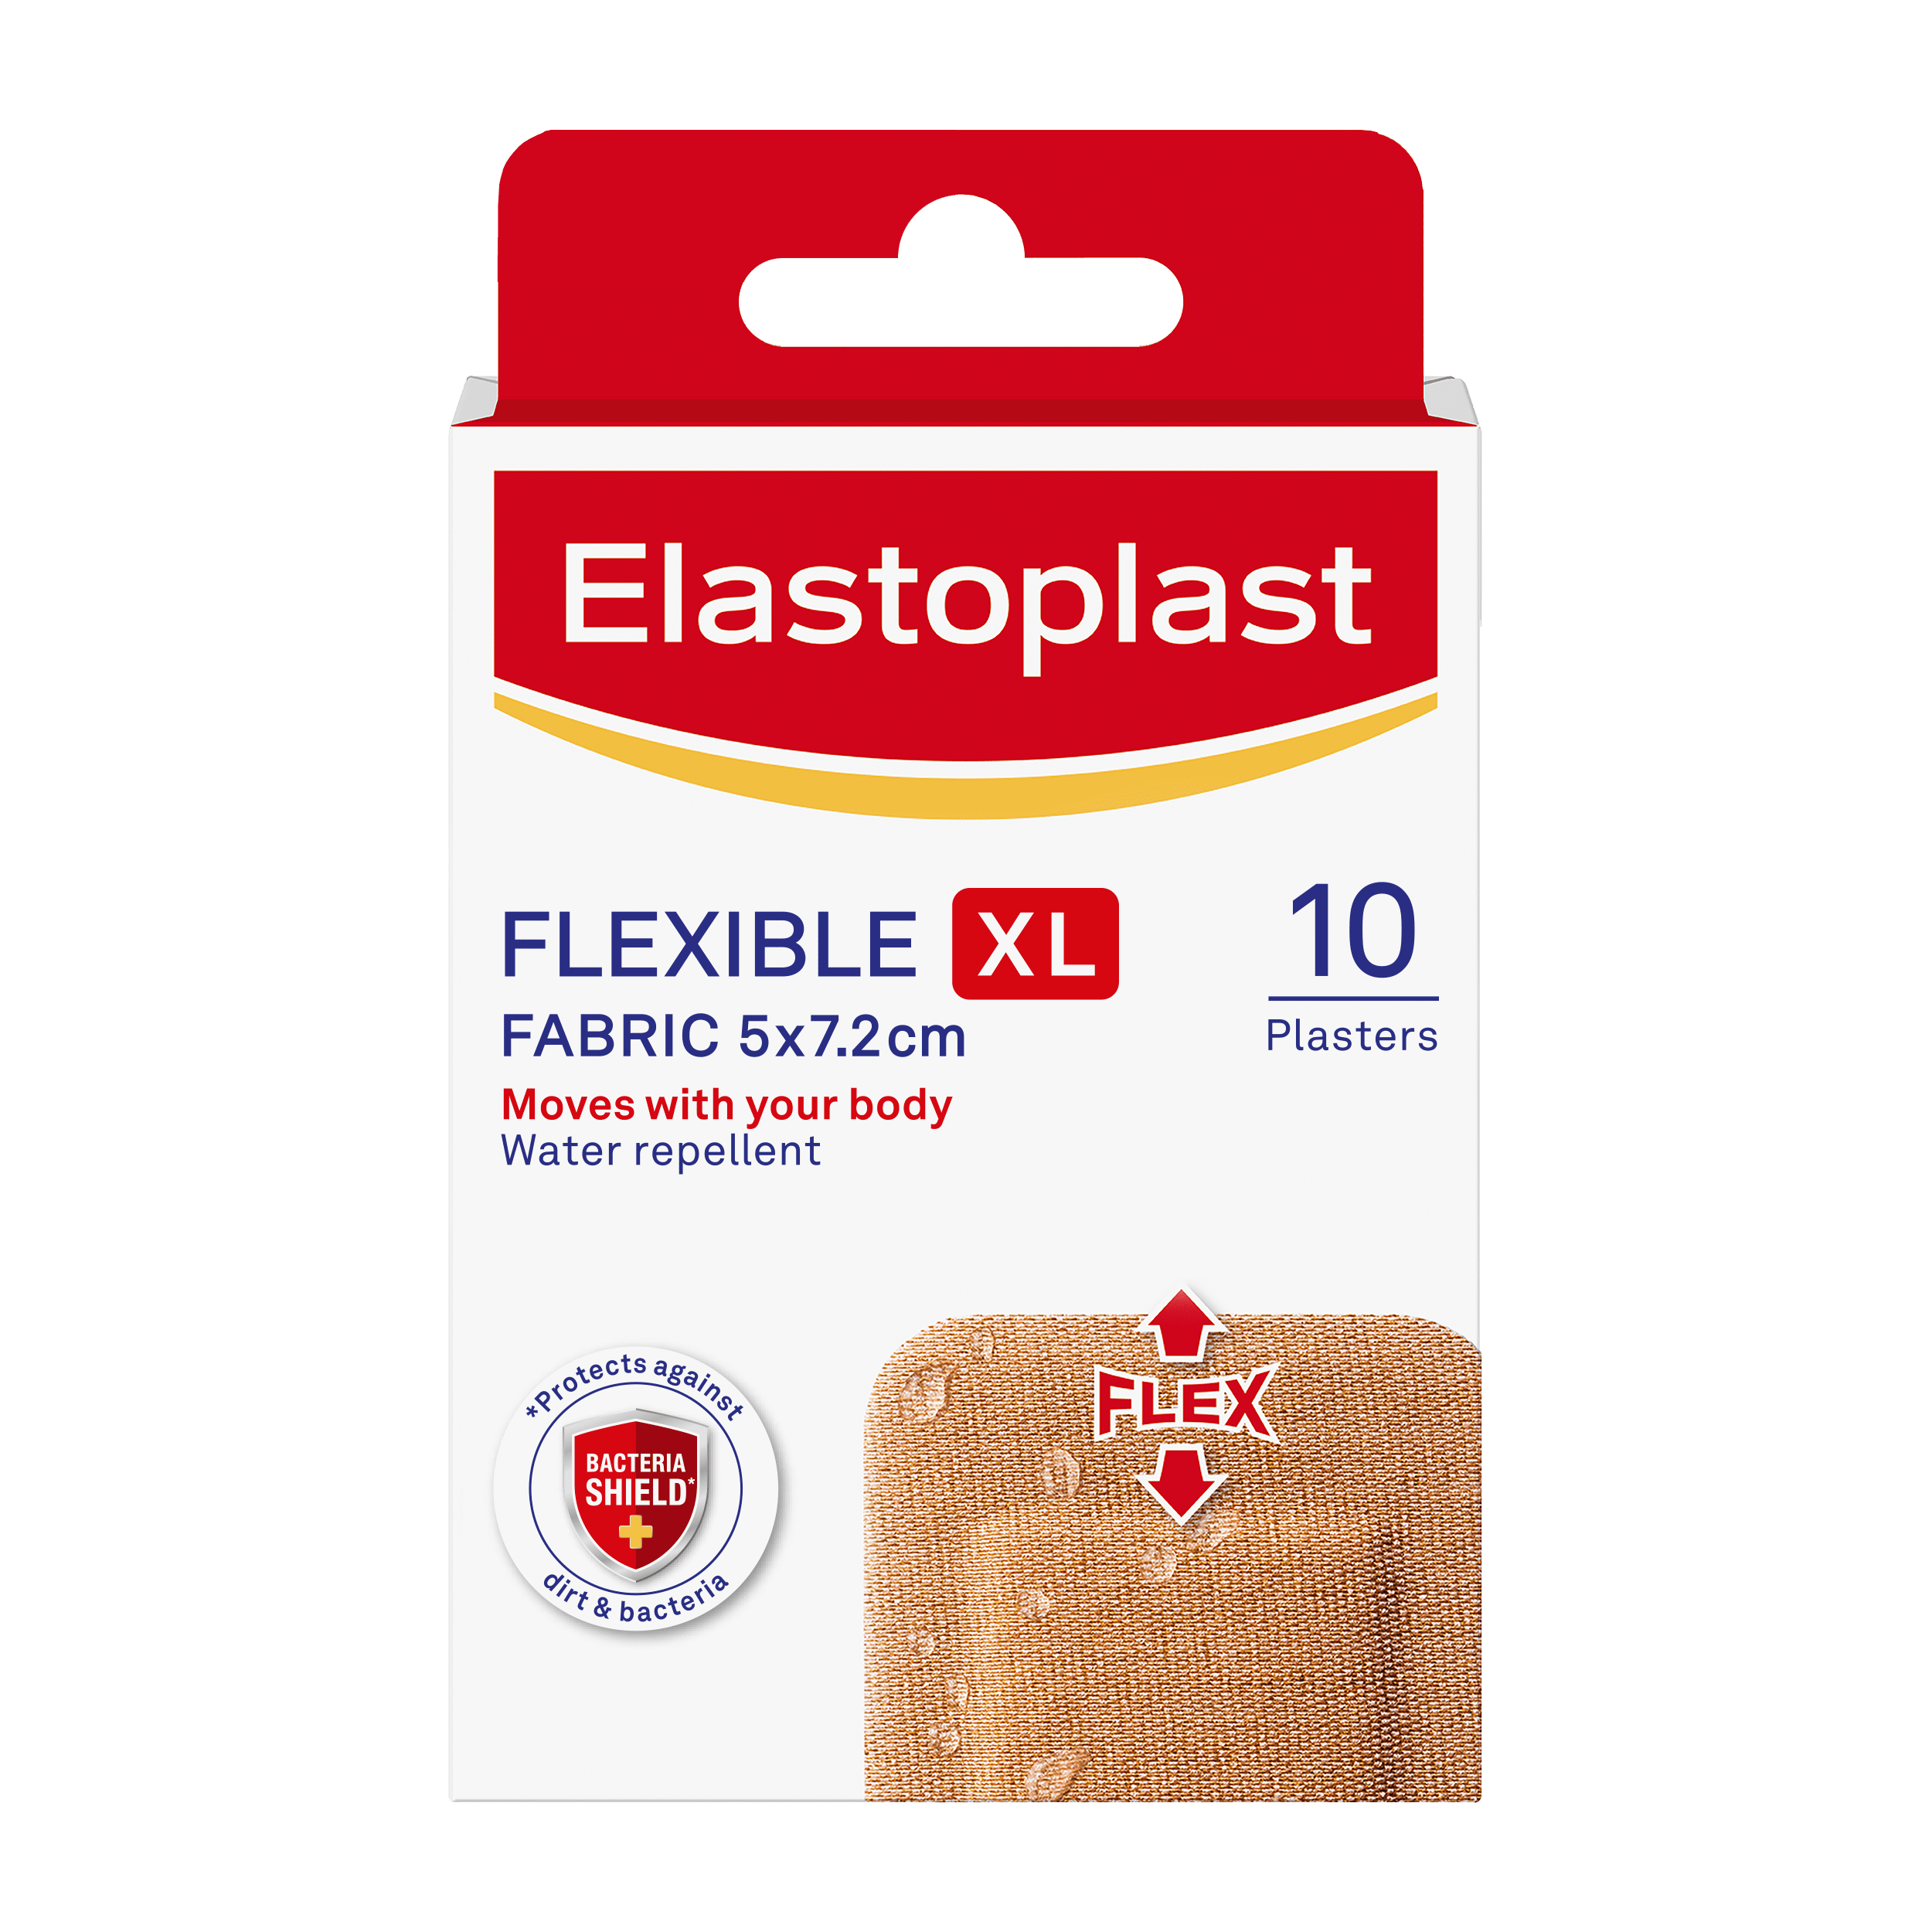 Elastoplast Flexible XL